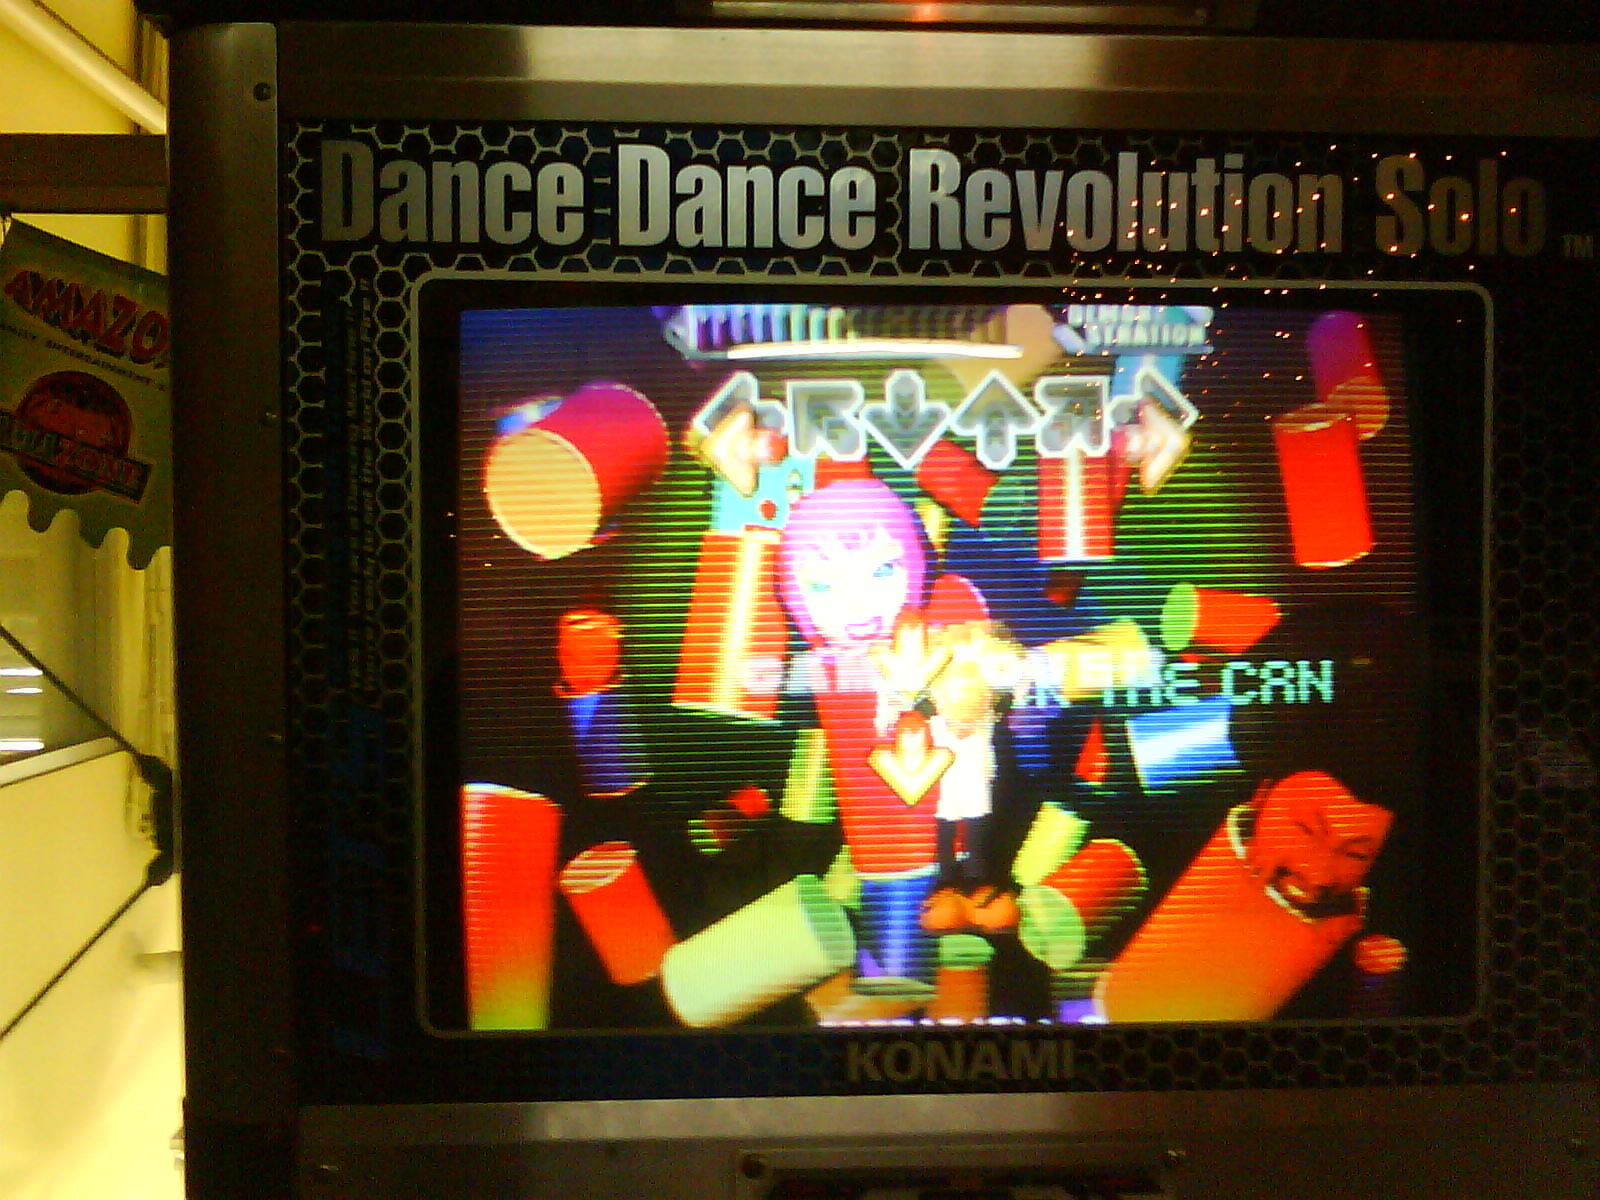 DDR Solo 4th Mix - Amazone Carrefour MT Haryono 3 - Arcade 